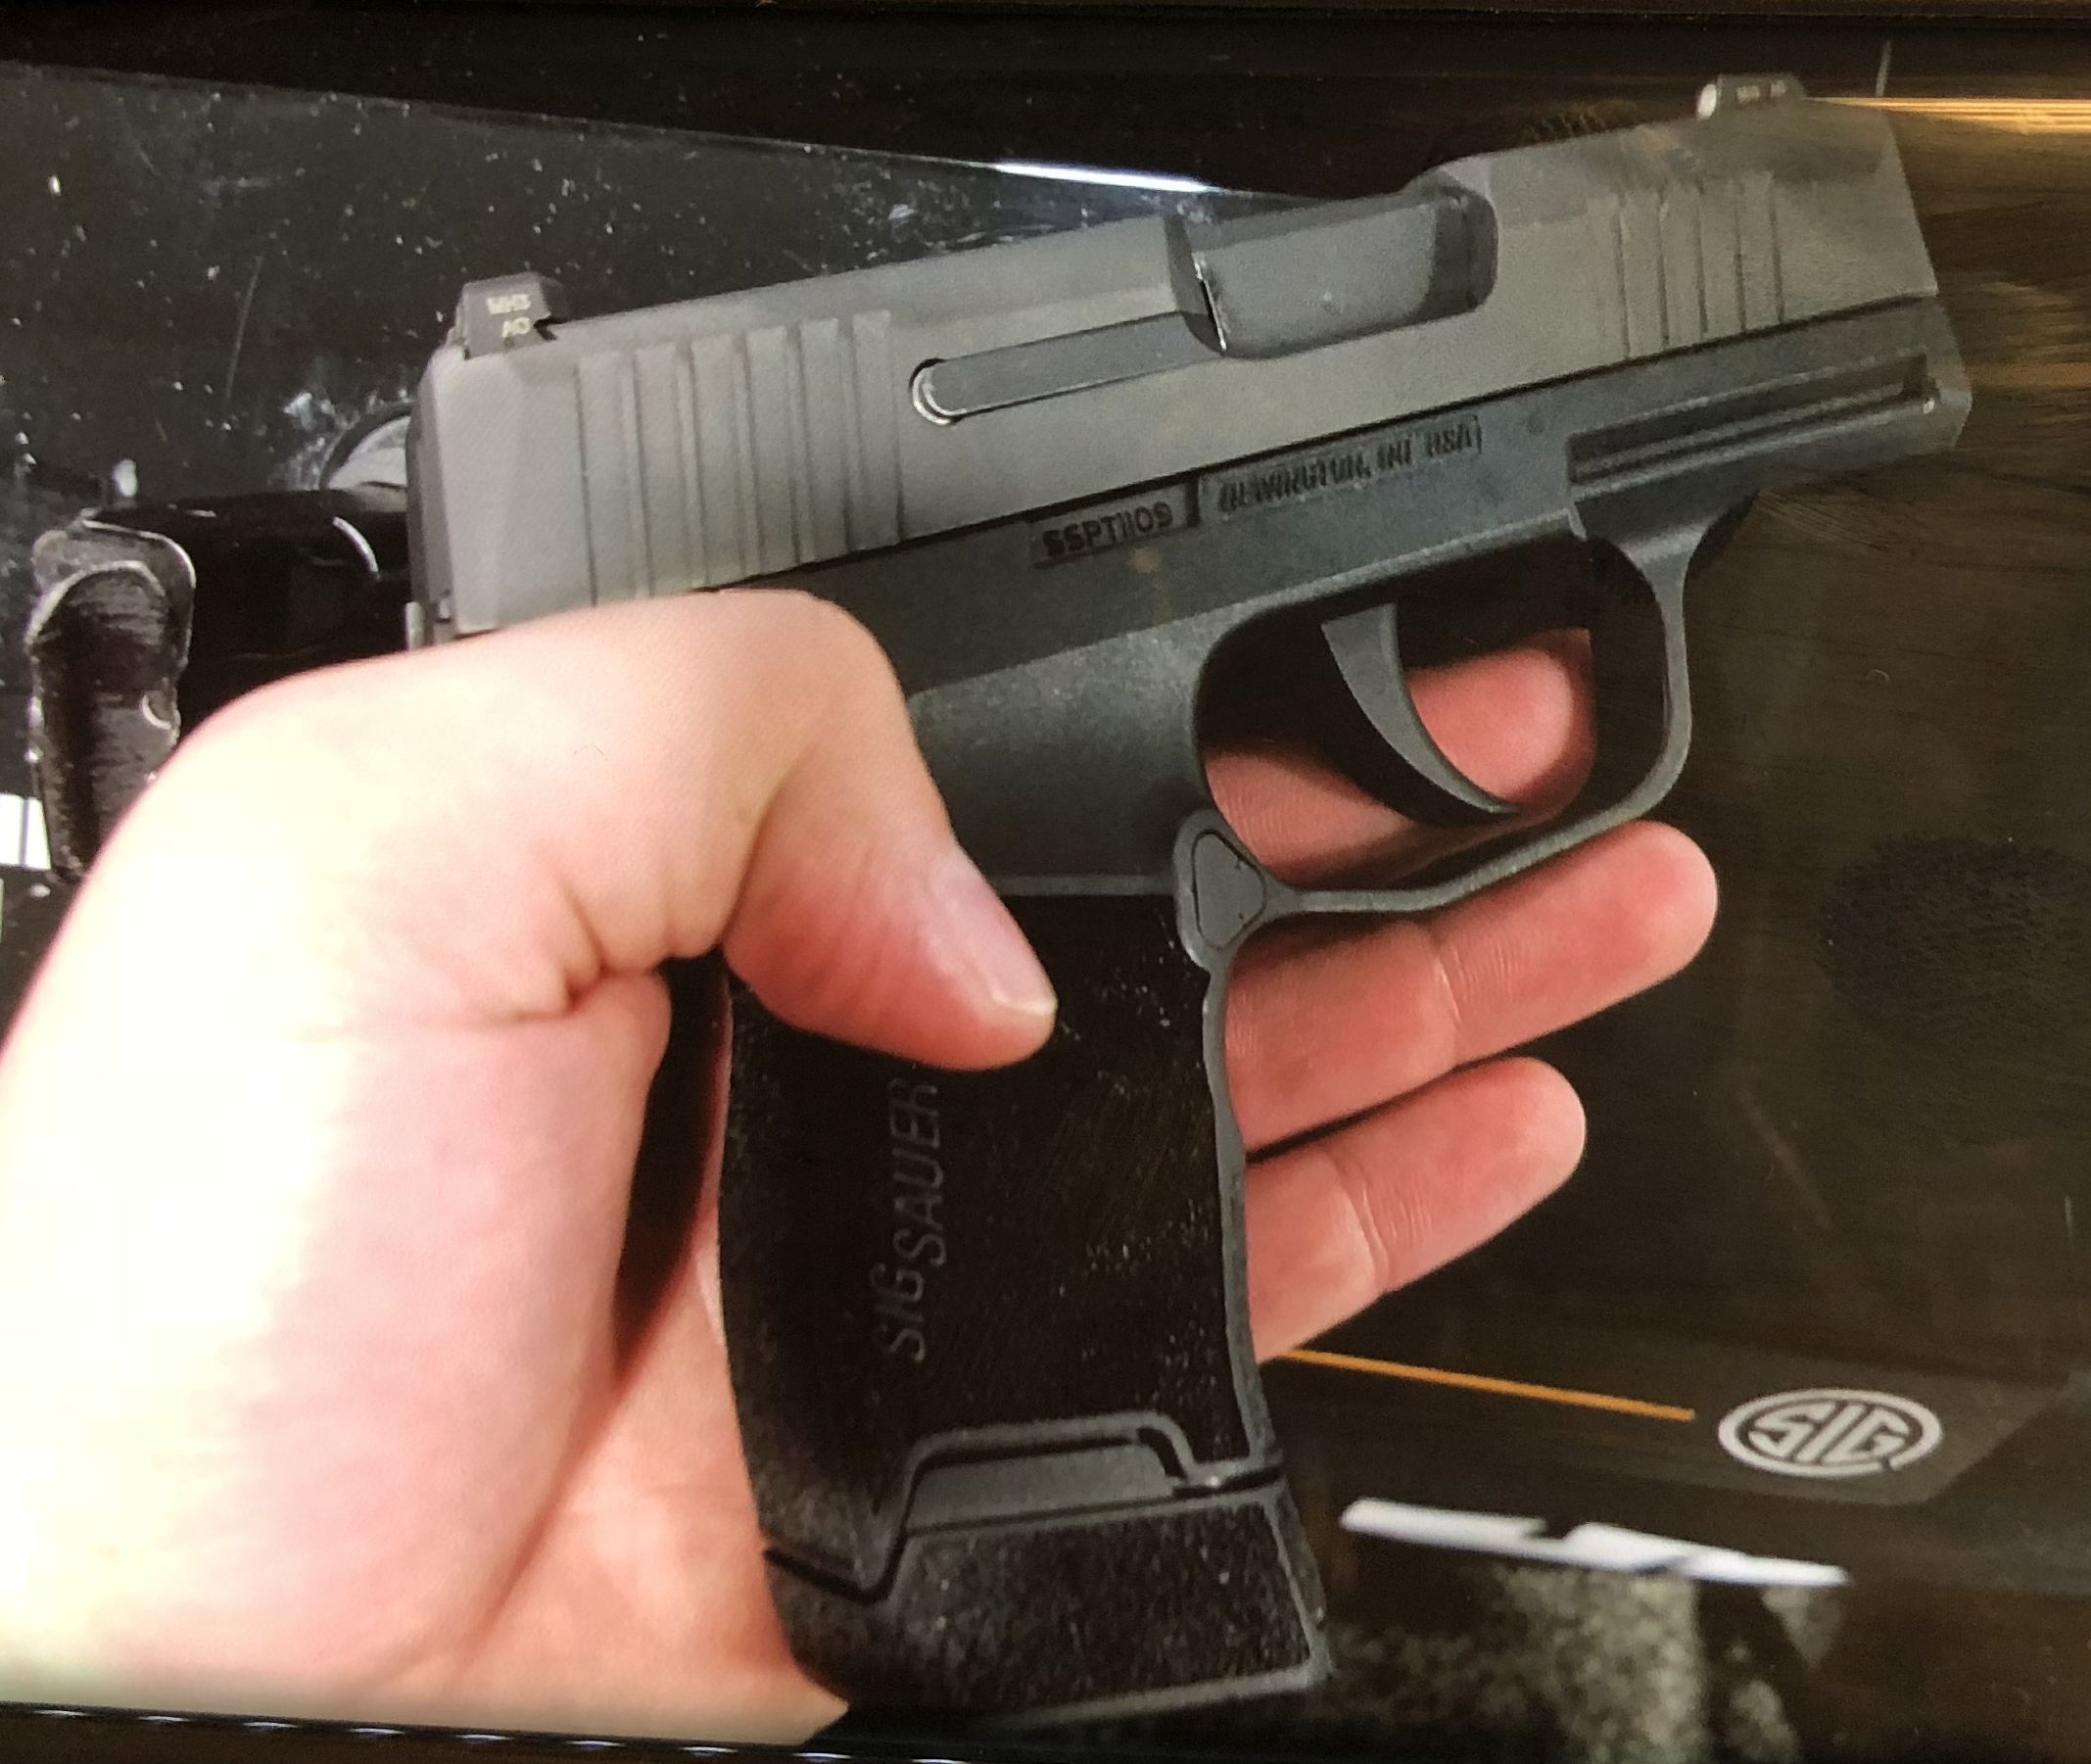 pocket pistol for self-defense